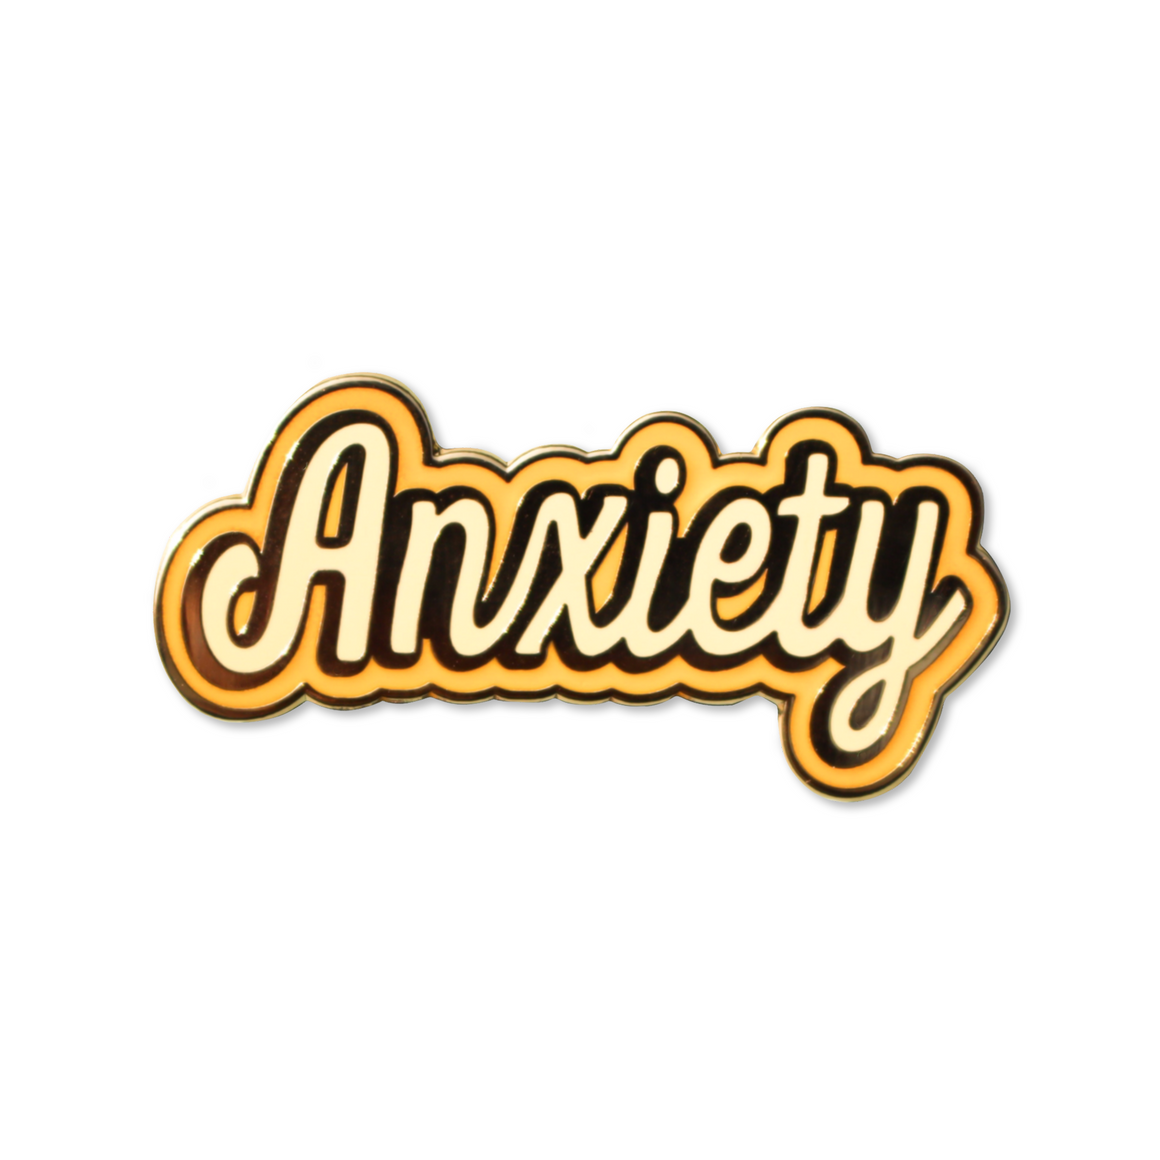 anxiety | enamel pin